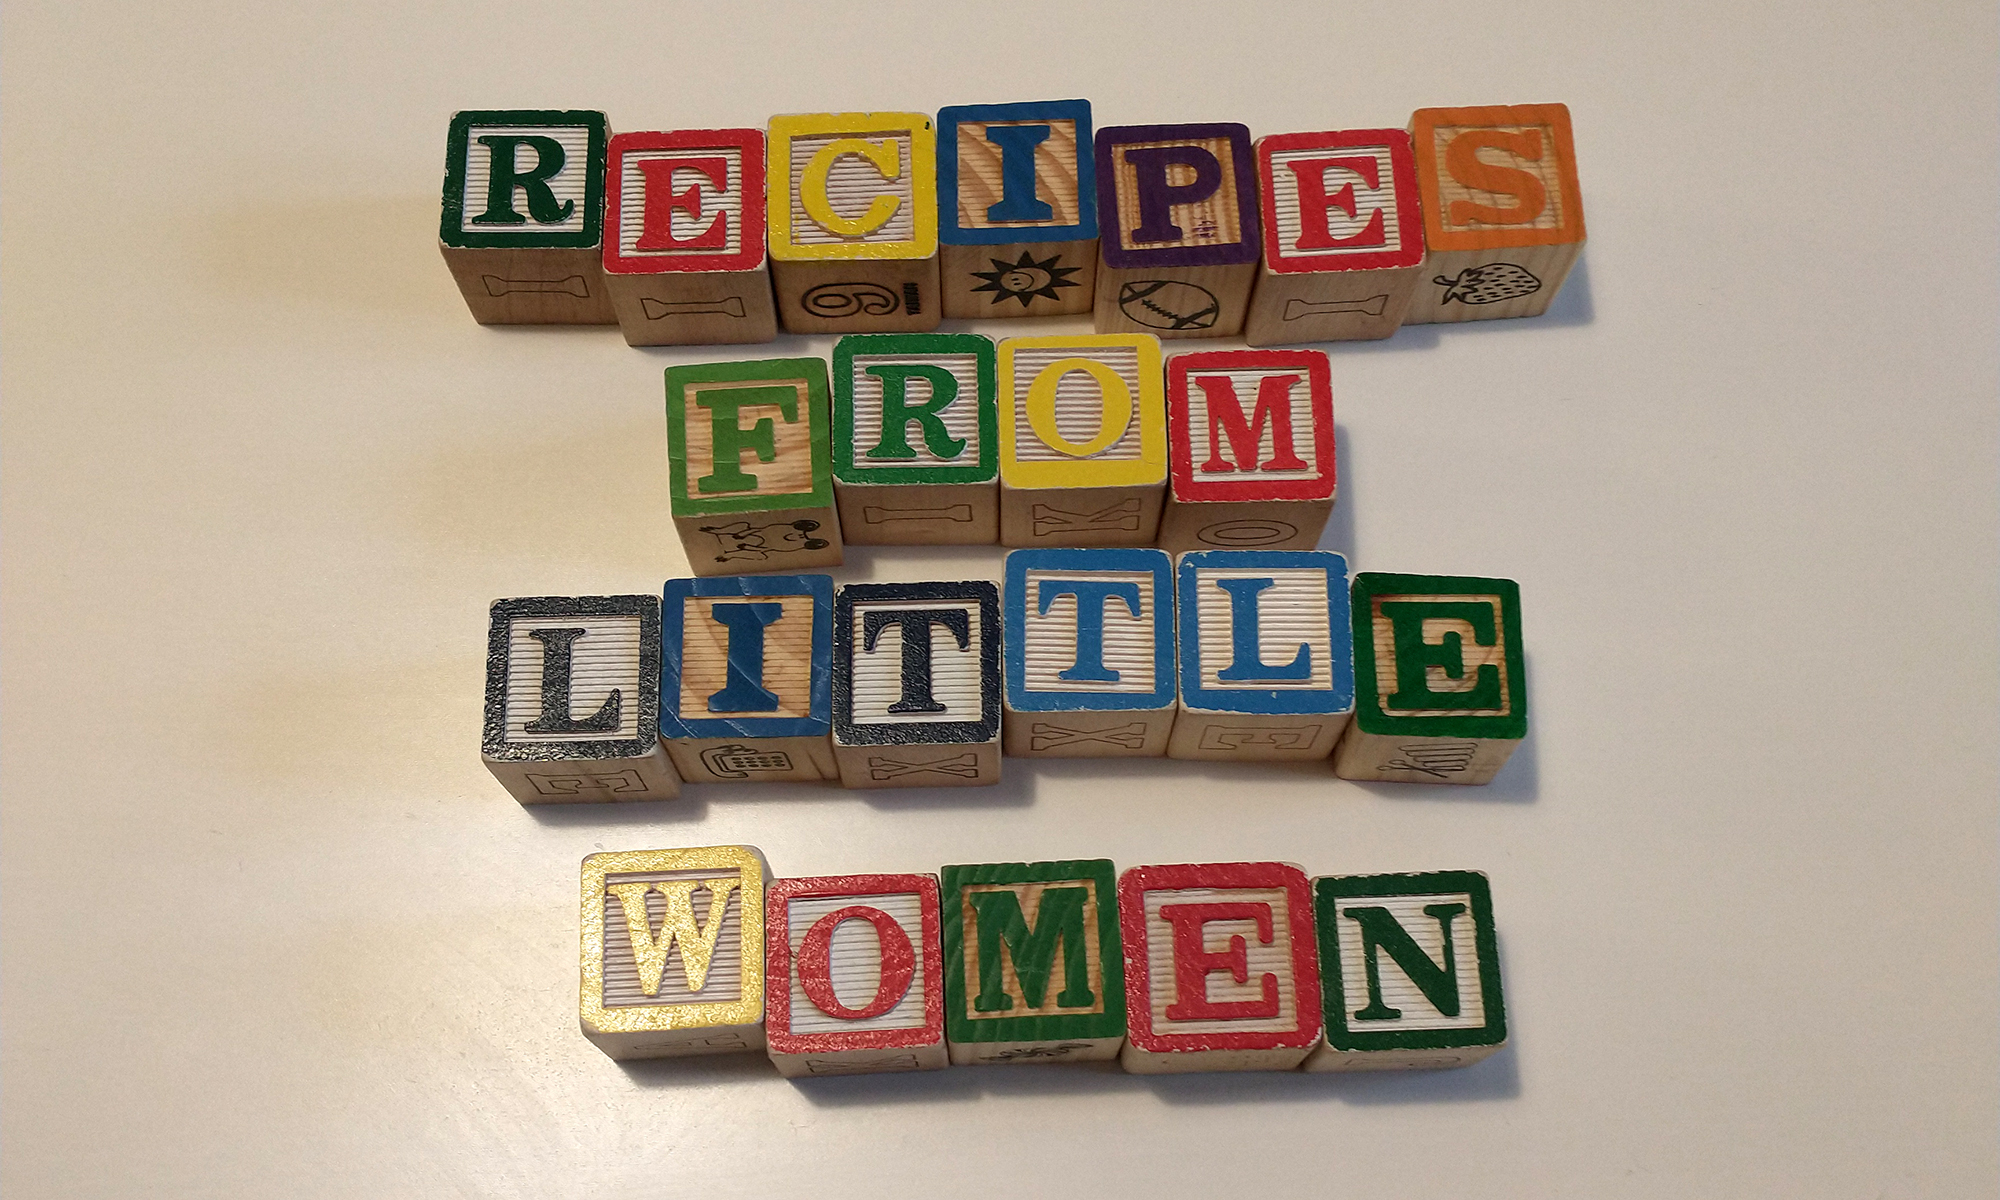 Recipes from Little Women